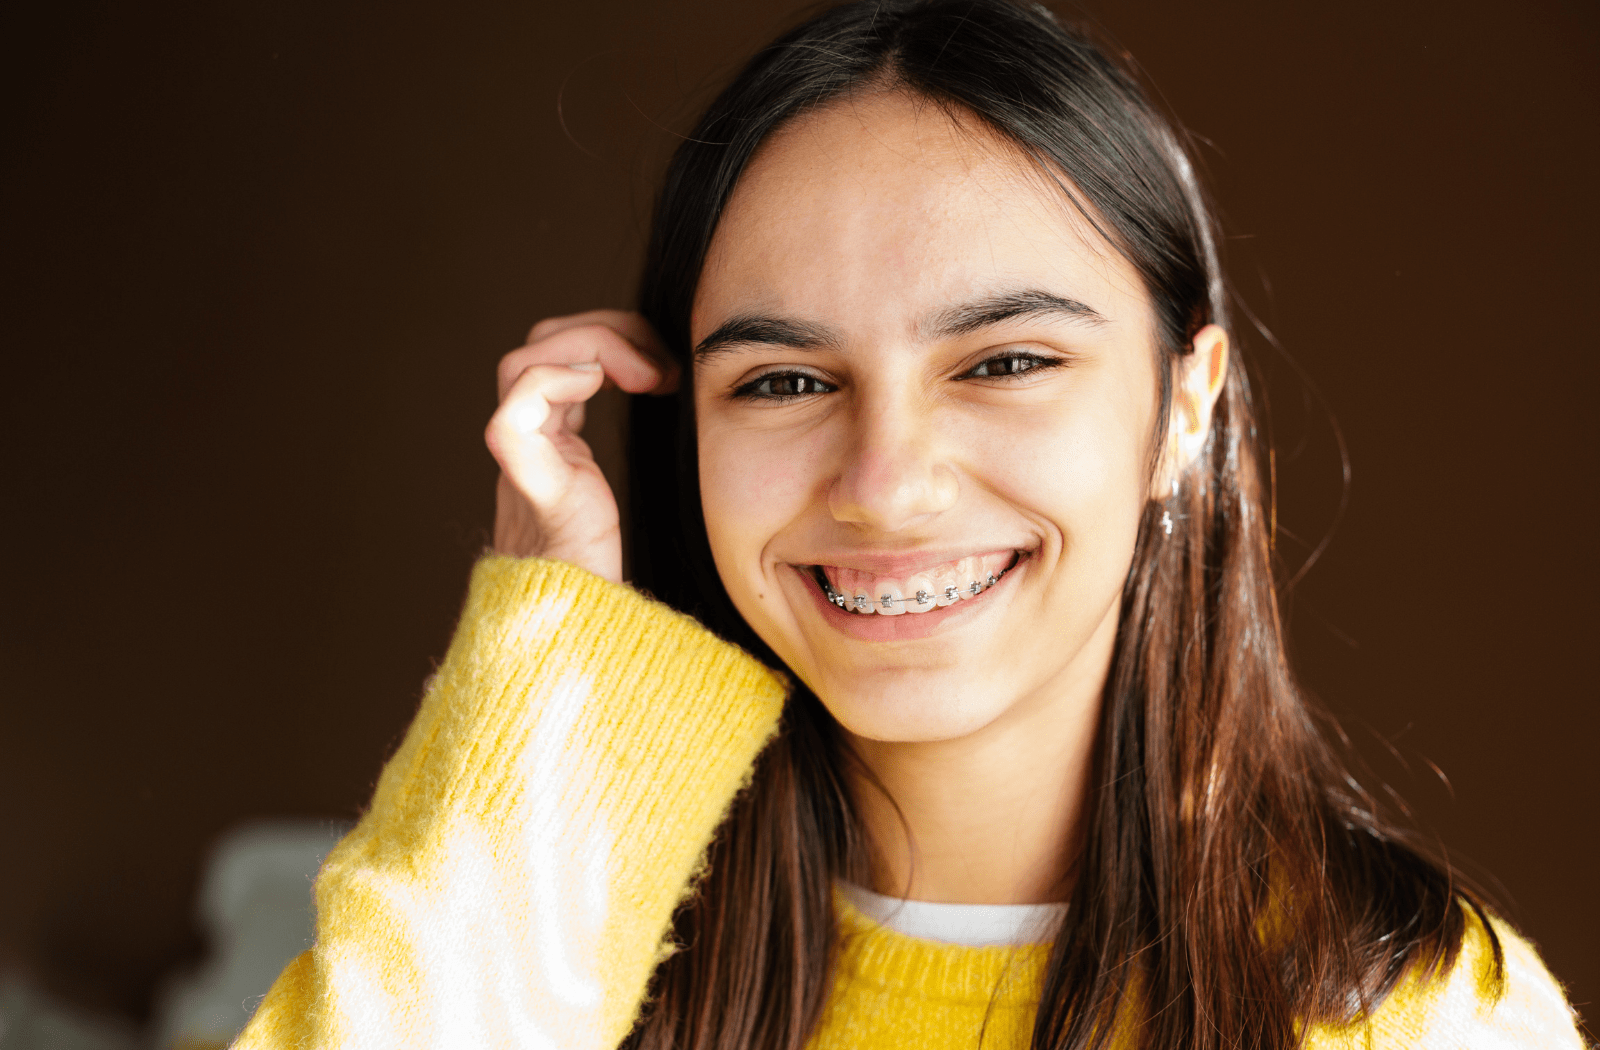 A teenage girl smiling and wearing metal braces